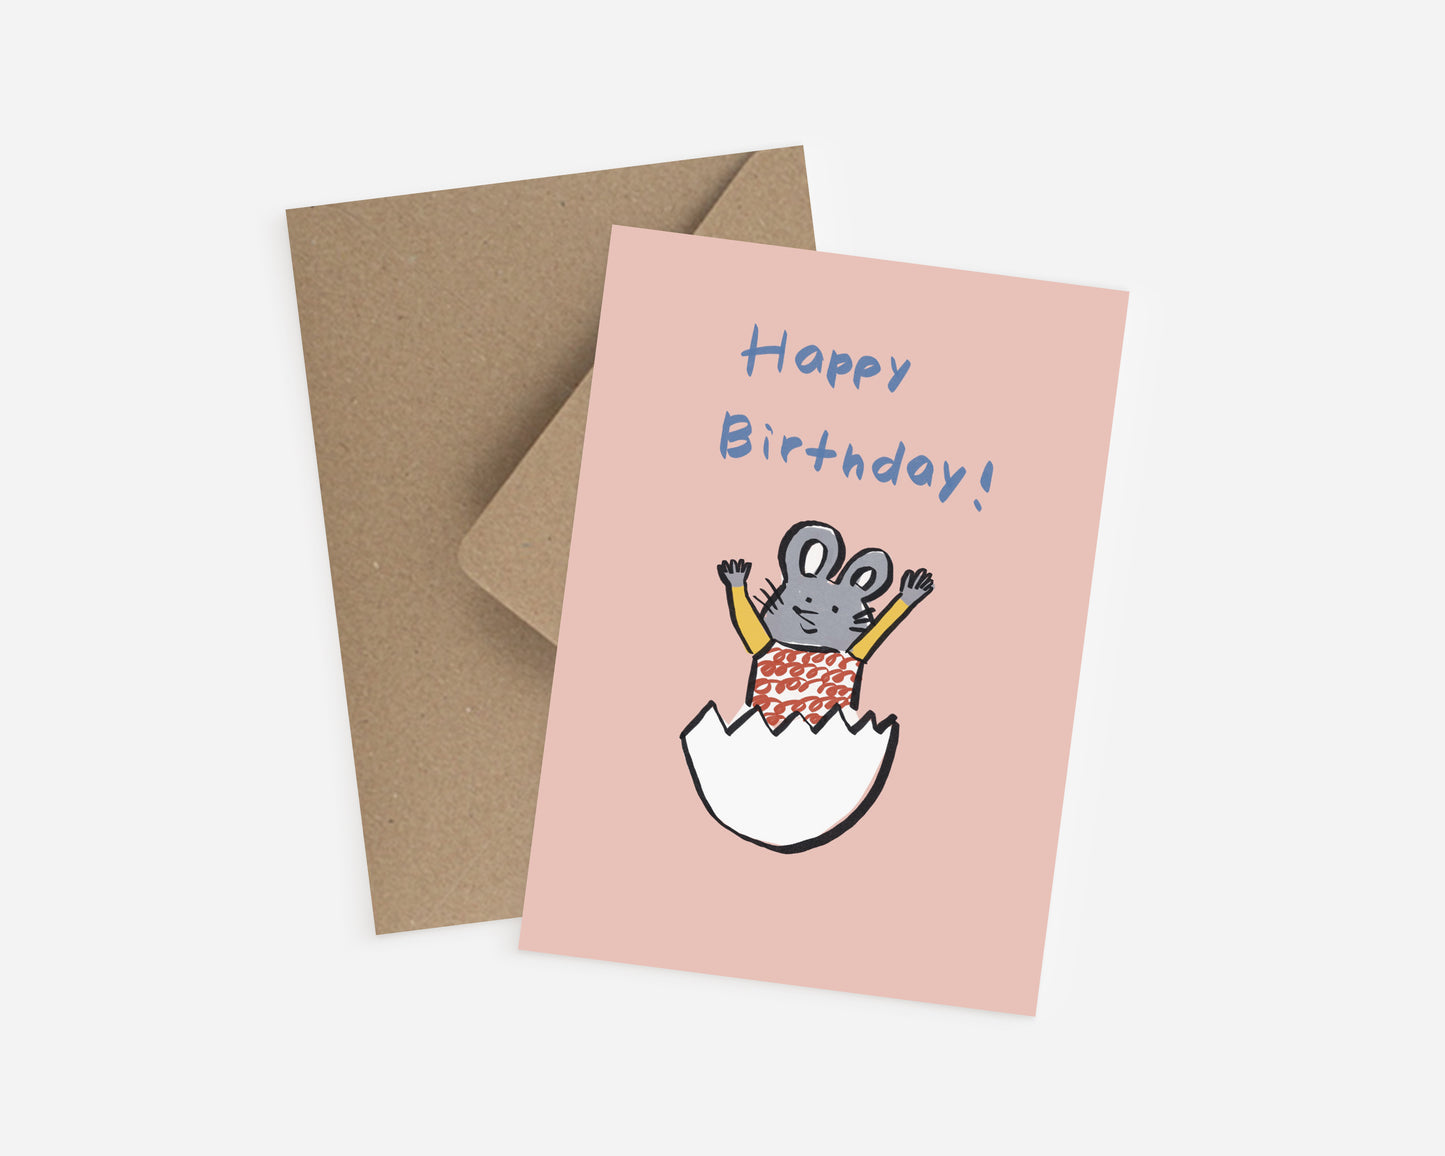 Greeting card - Happy Birthday!